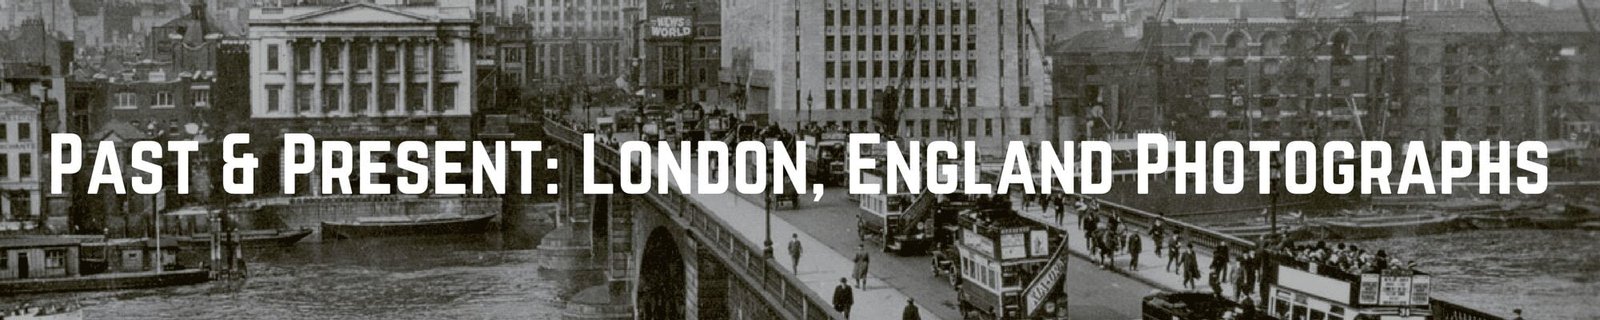 Past & Present: London, England Photographs